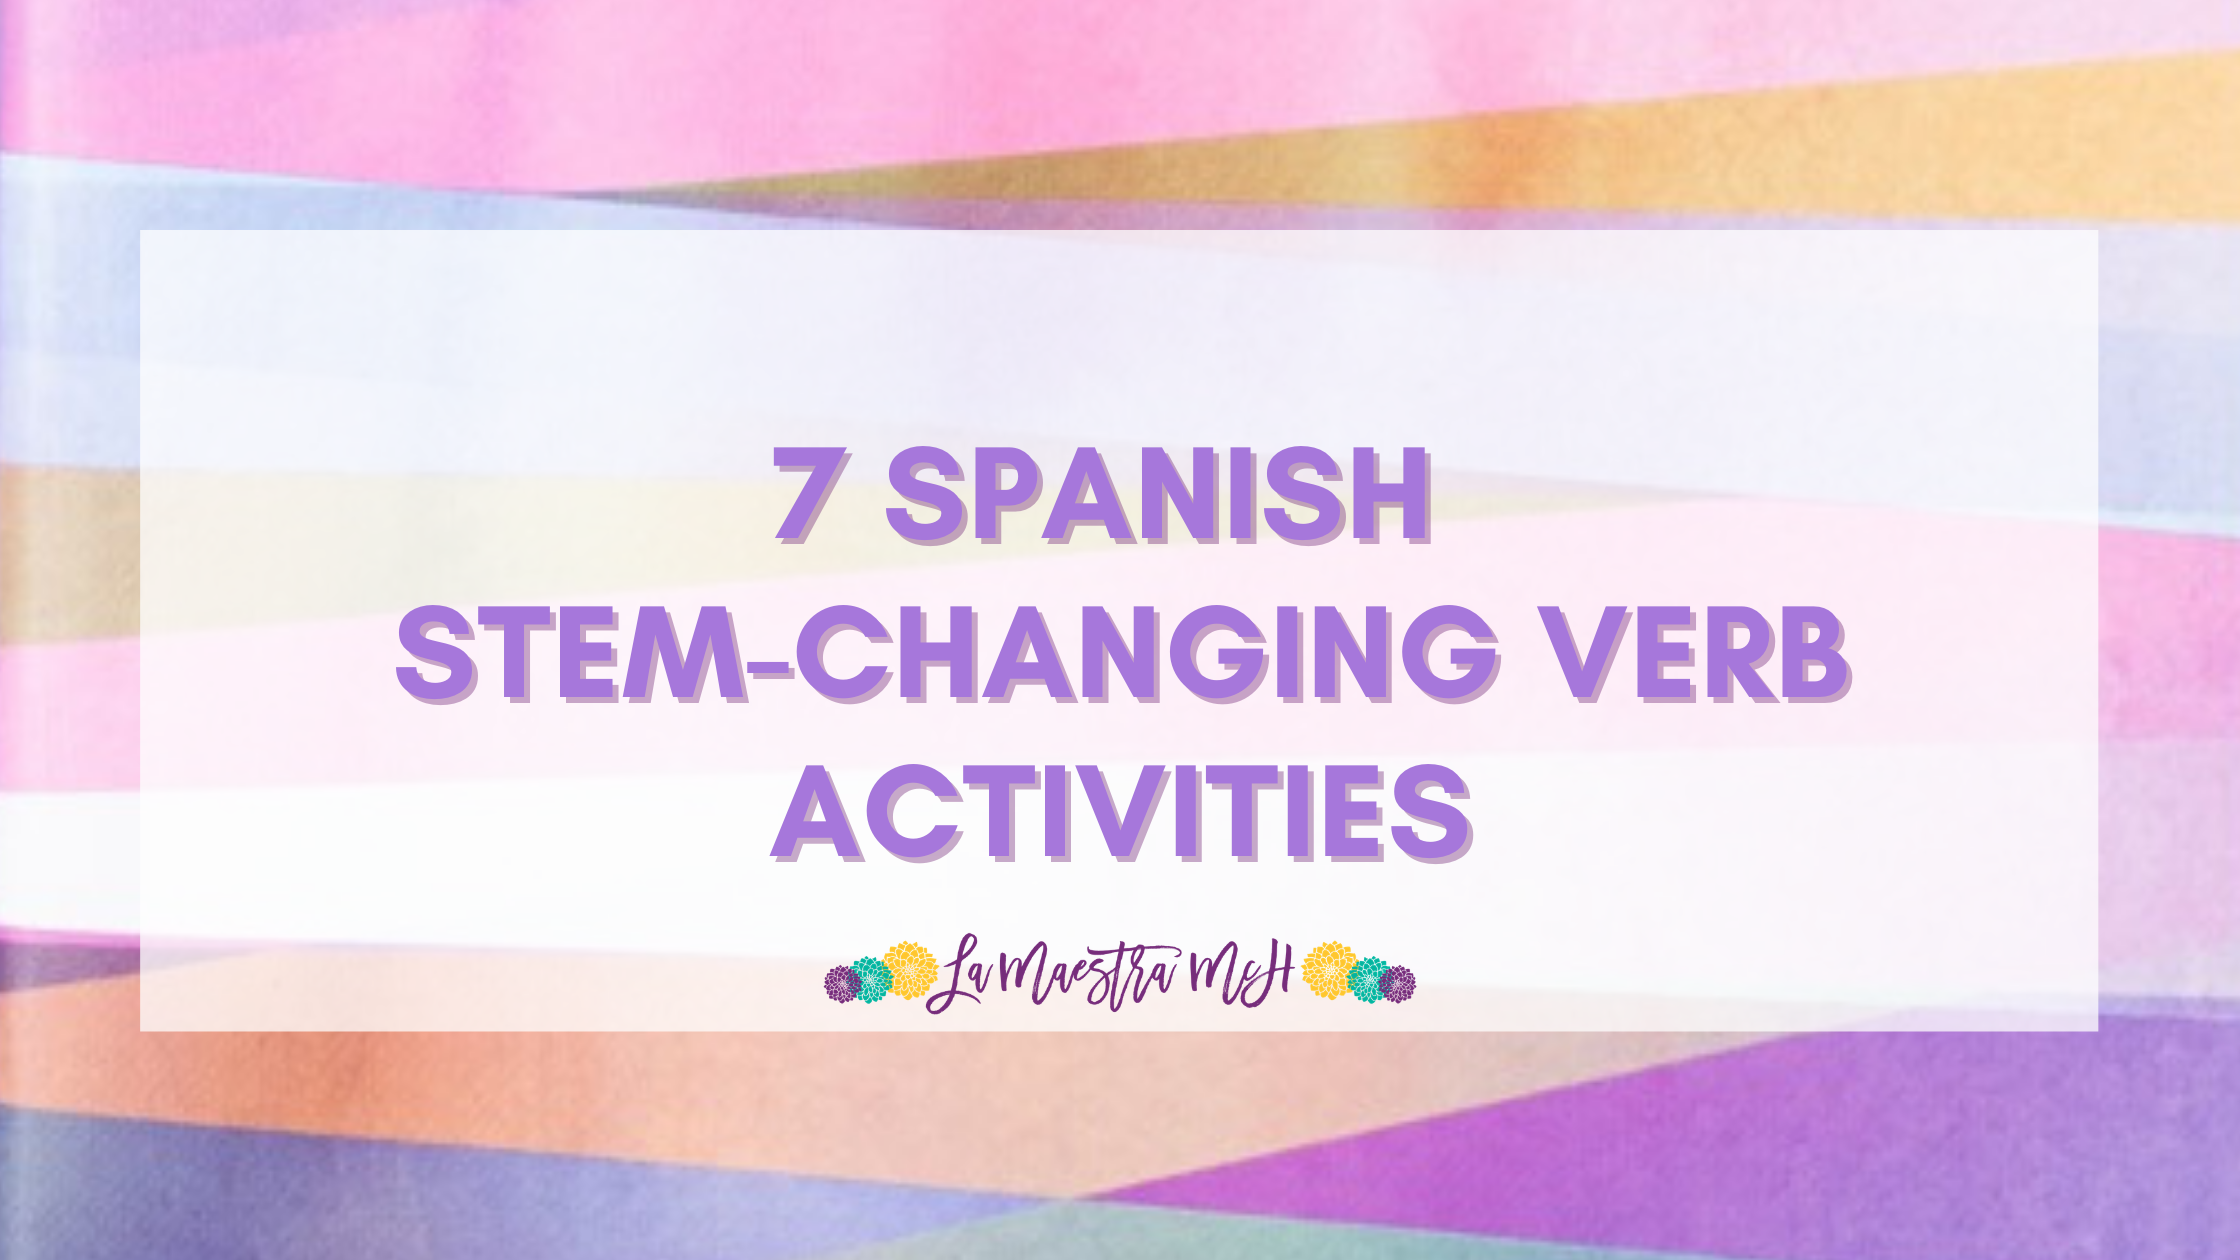 7 Spanish Stem-Changing Verb Activities